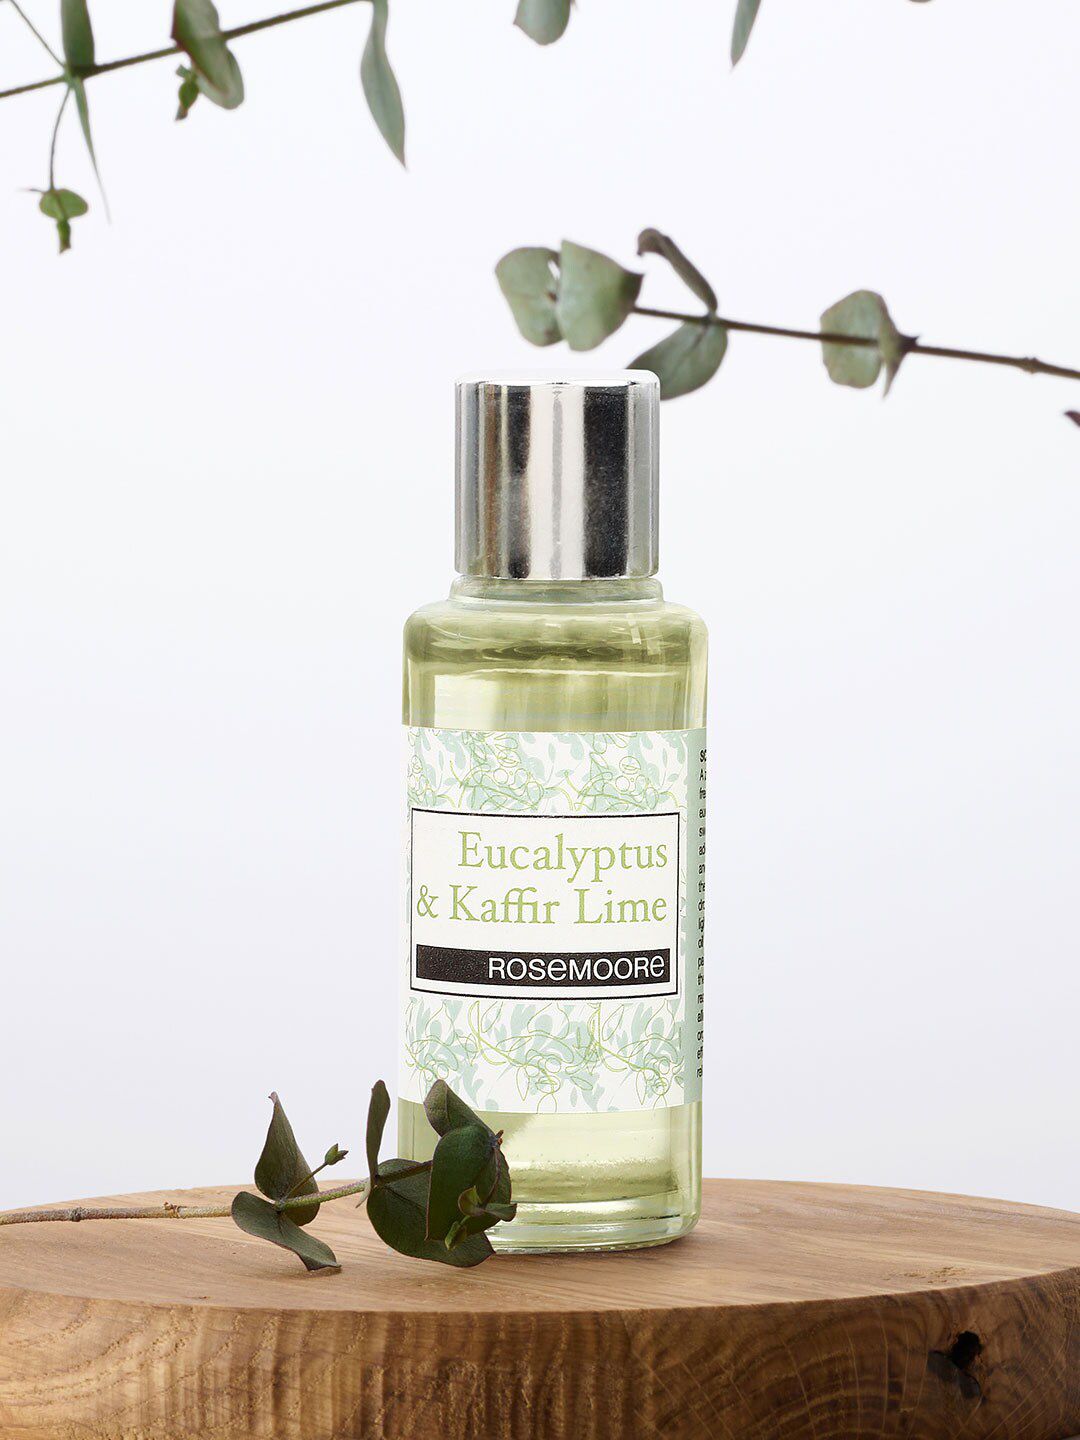 ROSEMOORe Eucalyptus & Kaffir Lime Scented Aroma Oil 15 ml Price in India